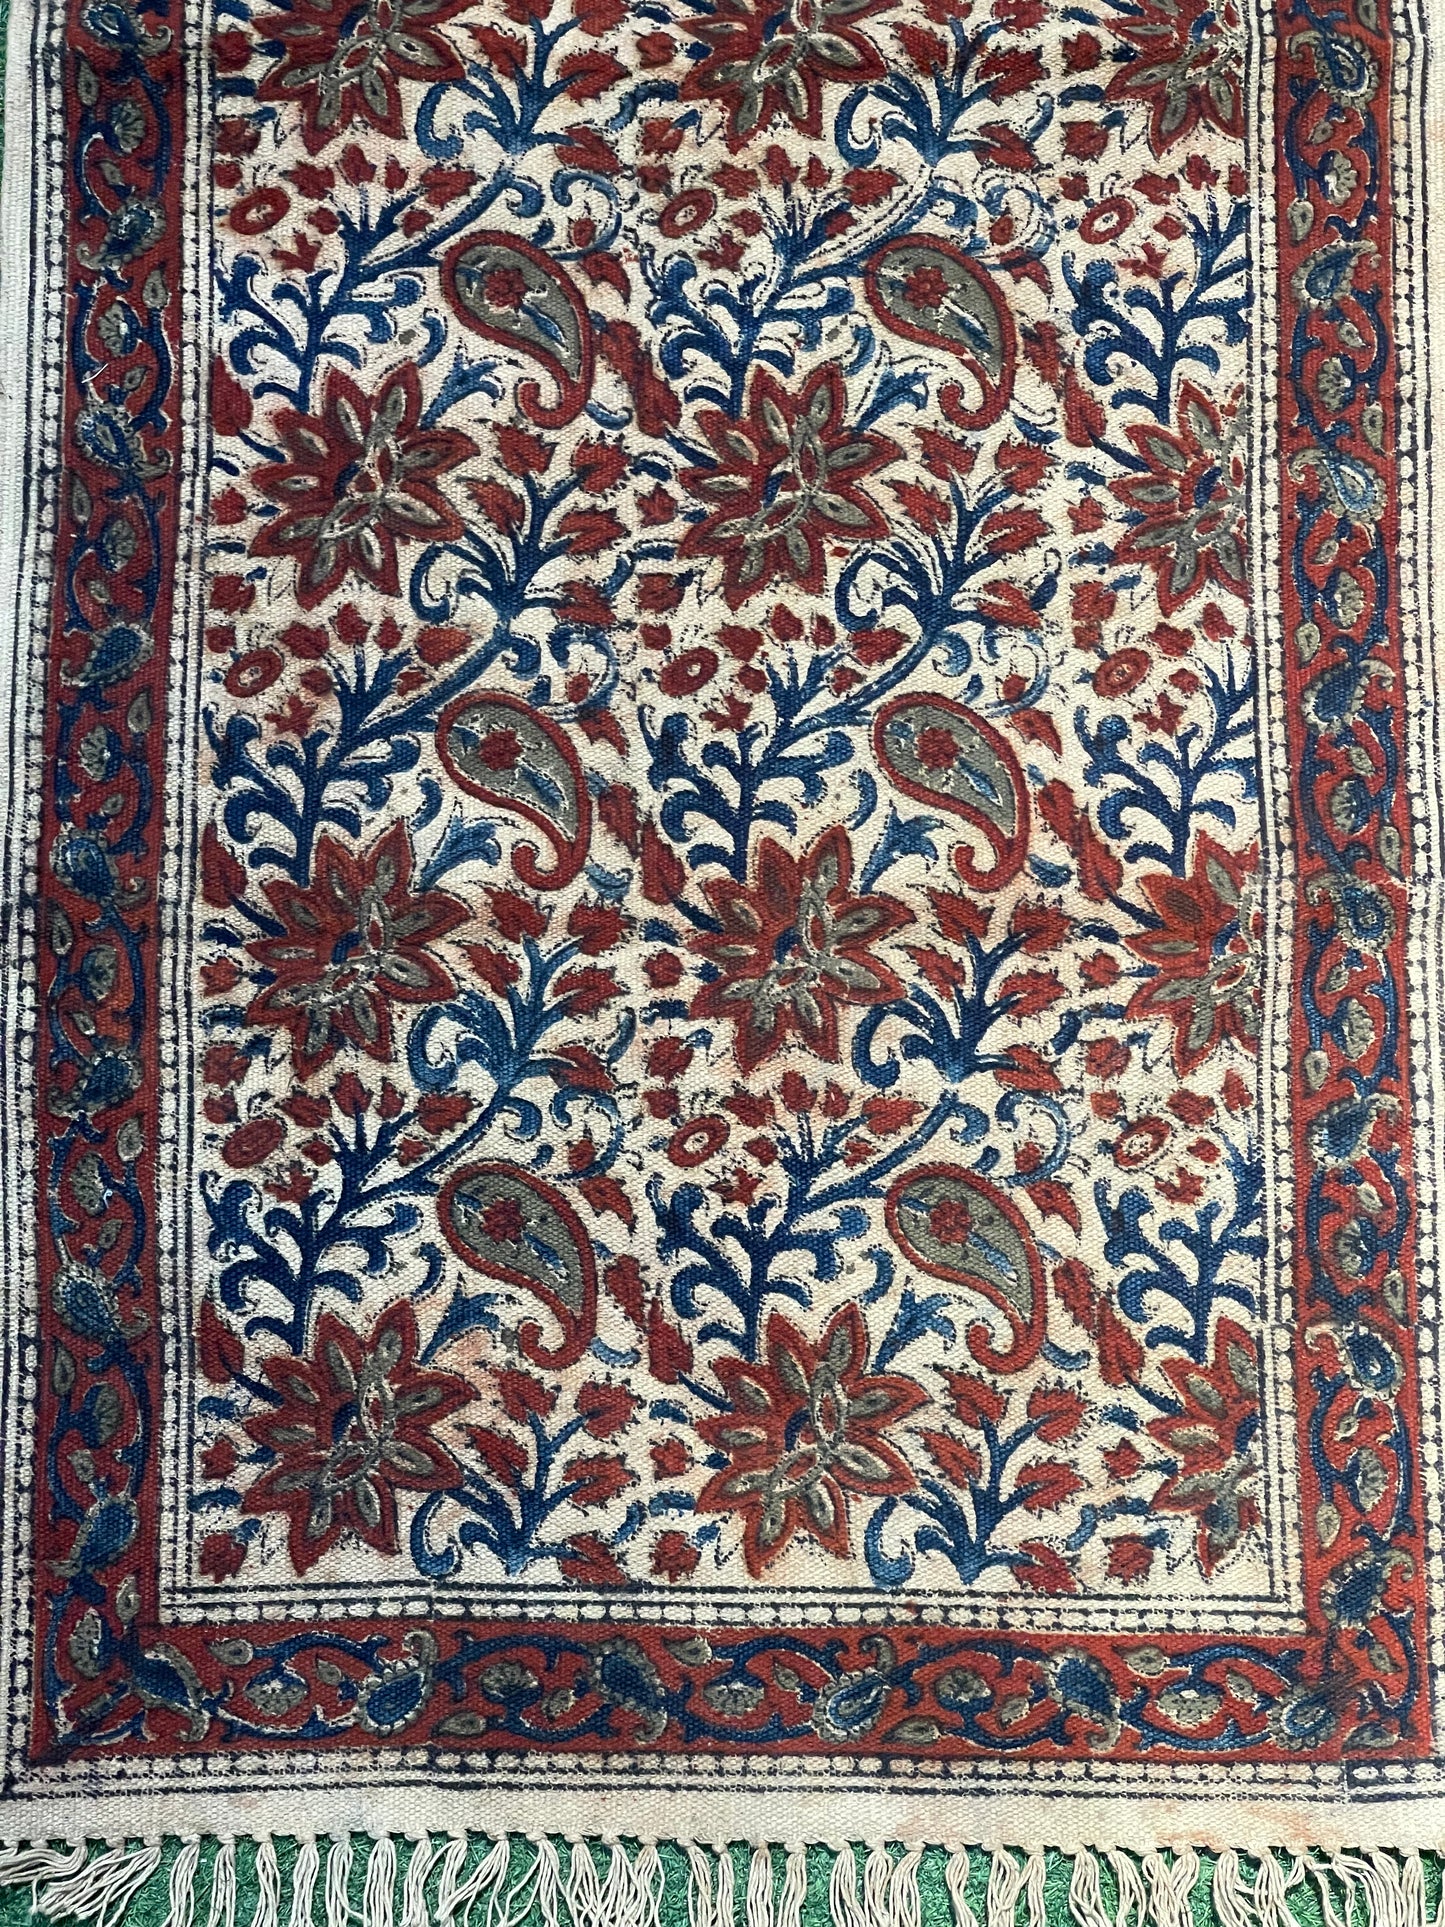 Flowers and paisleys cotton Kalamkari hand block printed runner carpet 2 x 5 ft